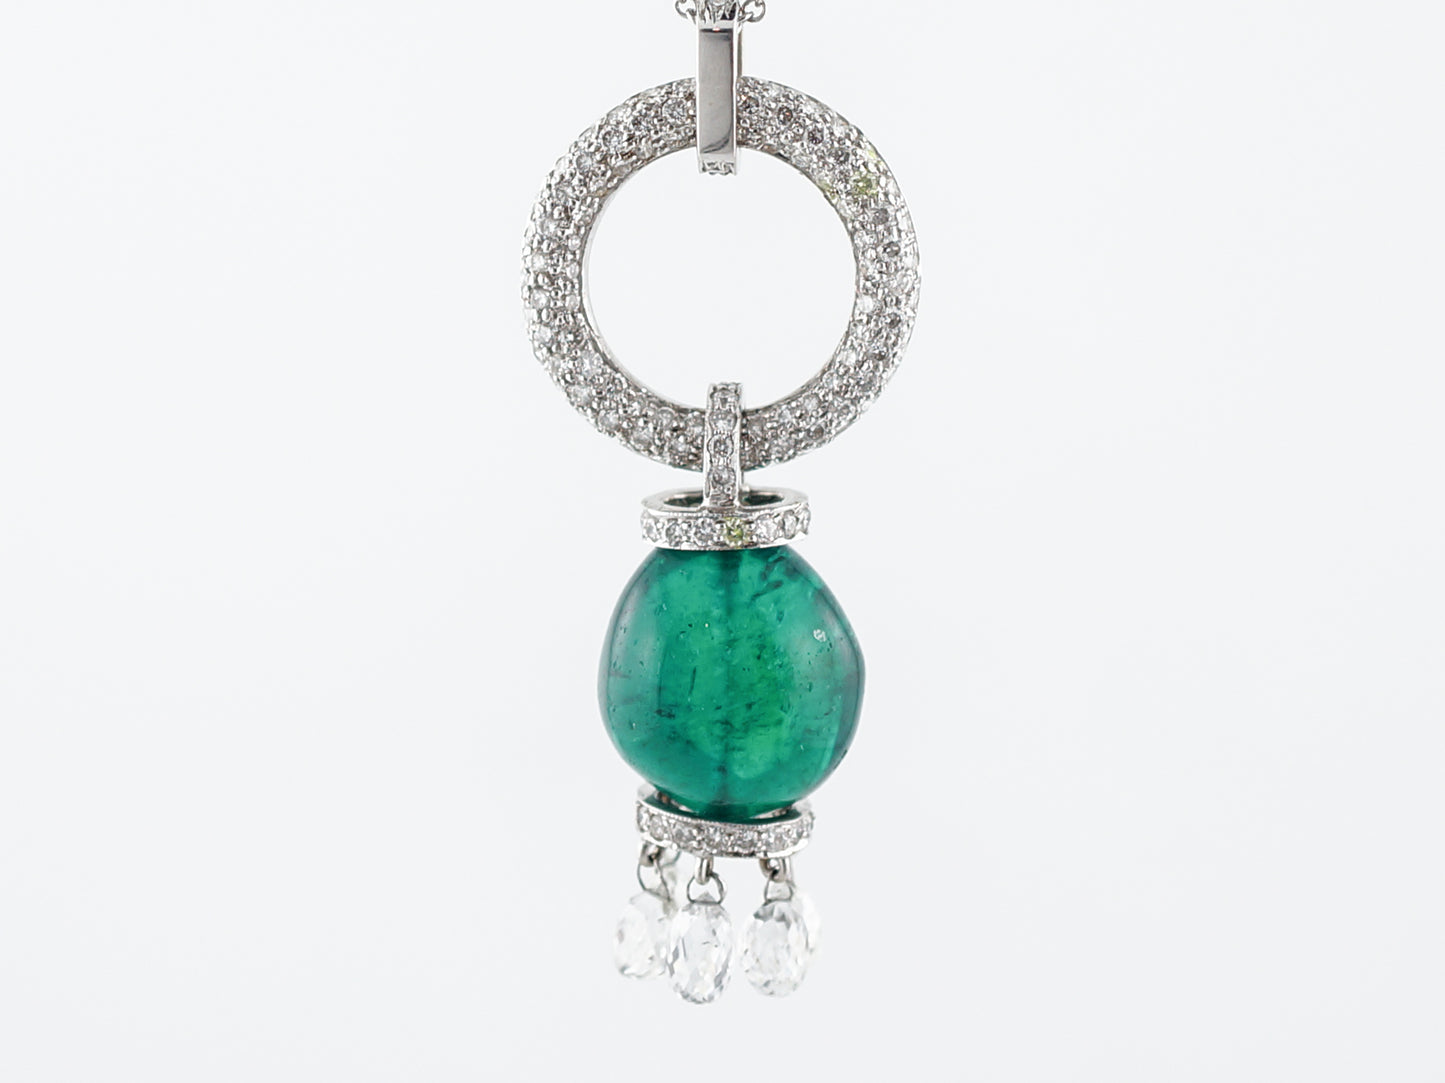 ***RTV***Necklace Modern 17.04 Carved Emerald & 6.52 Round Brilliant Cut Diamonds in 18K White Gold